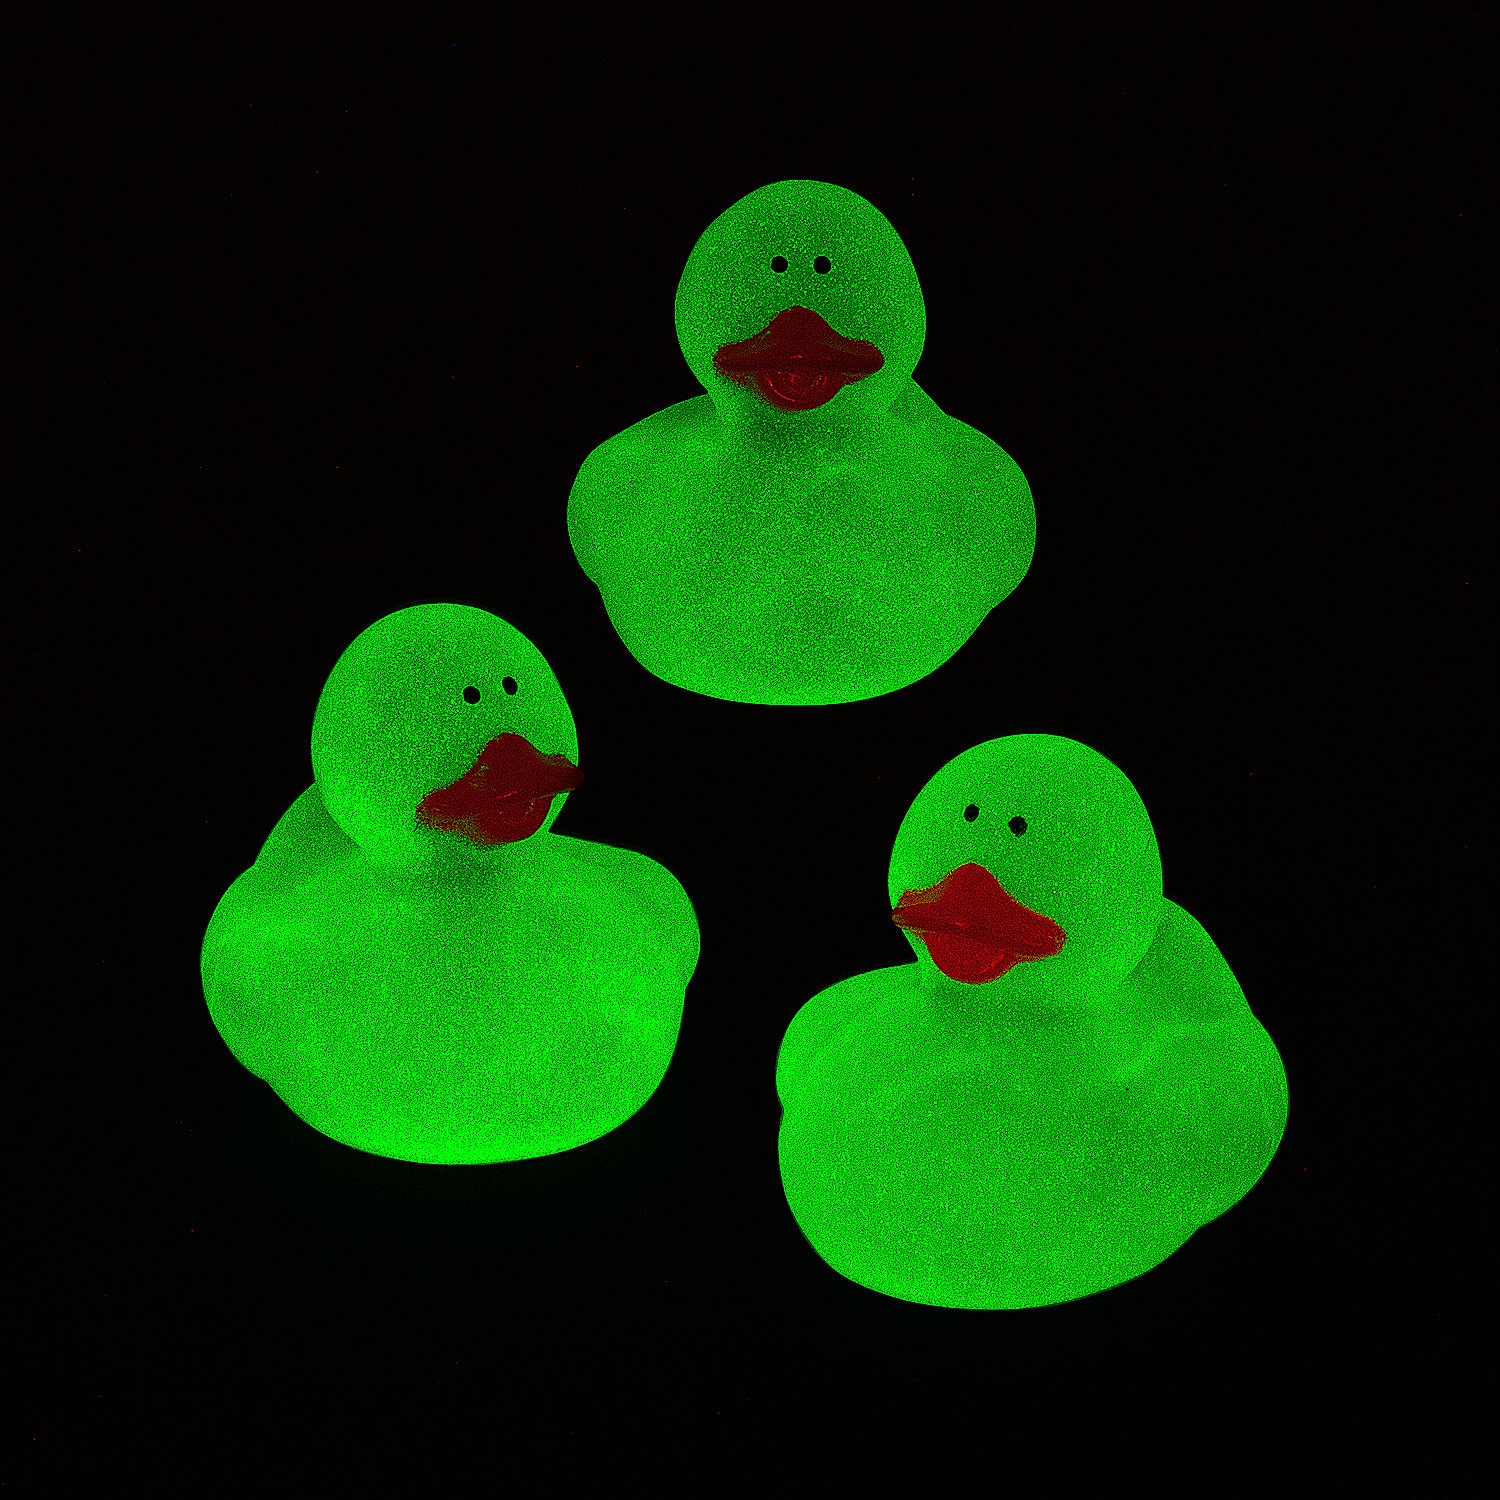 glow-in-the-dark-rubber-ducks-12-pc-_14113613-a01